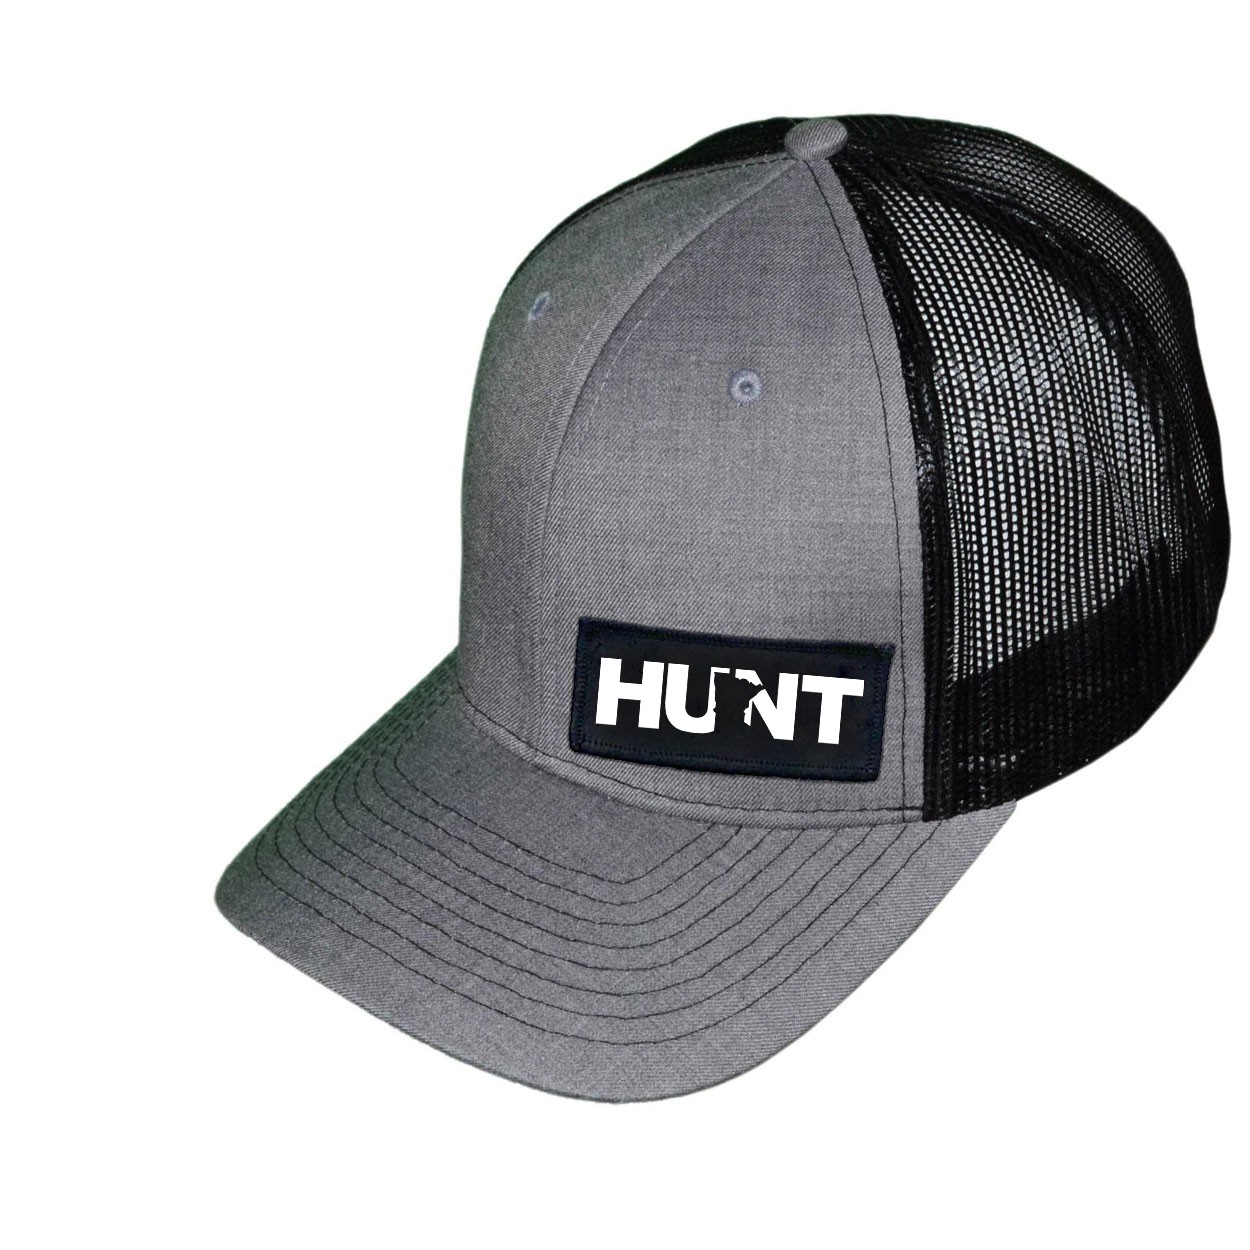 Hunt Minnesota Night Out Woven Patch Snapback Trucker Hat Heather Gray/Black (White Logo)